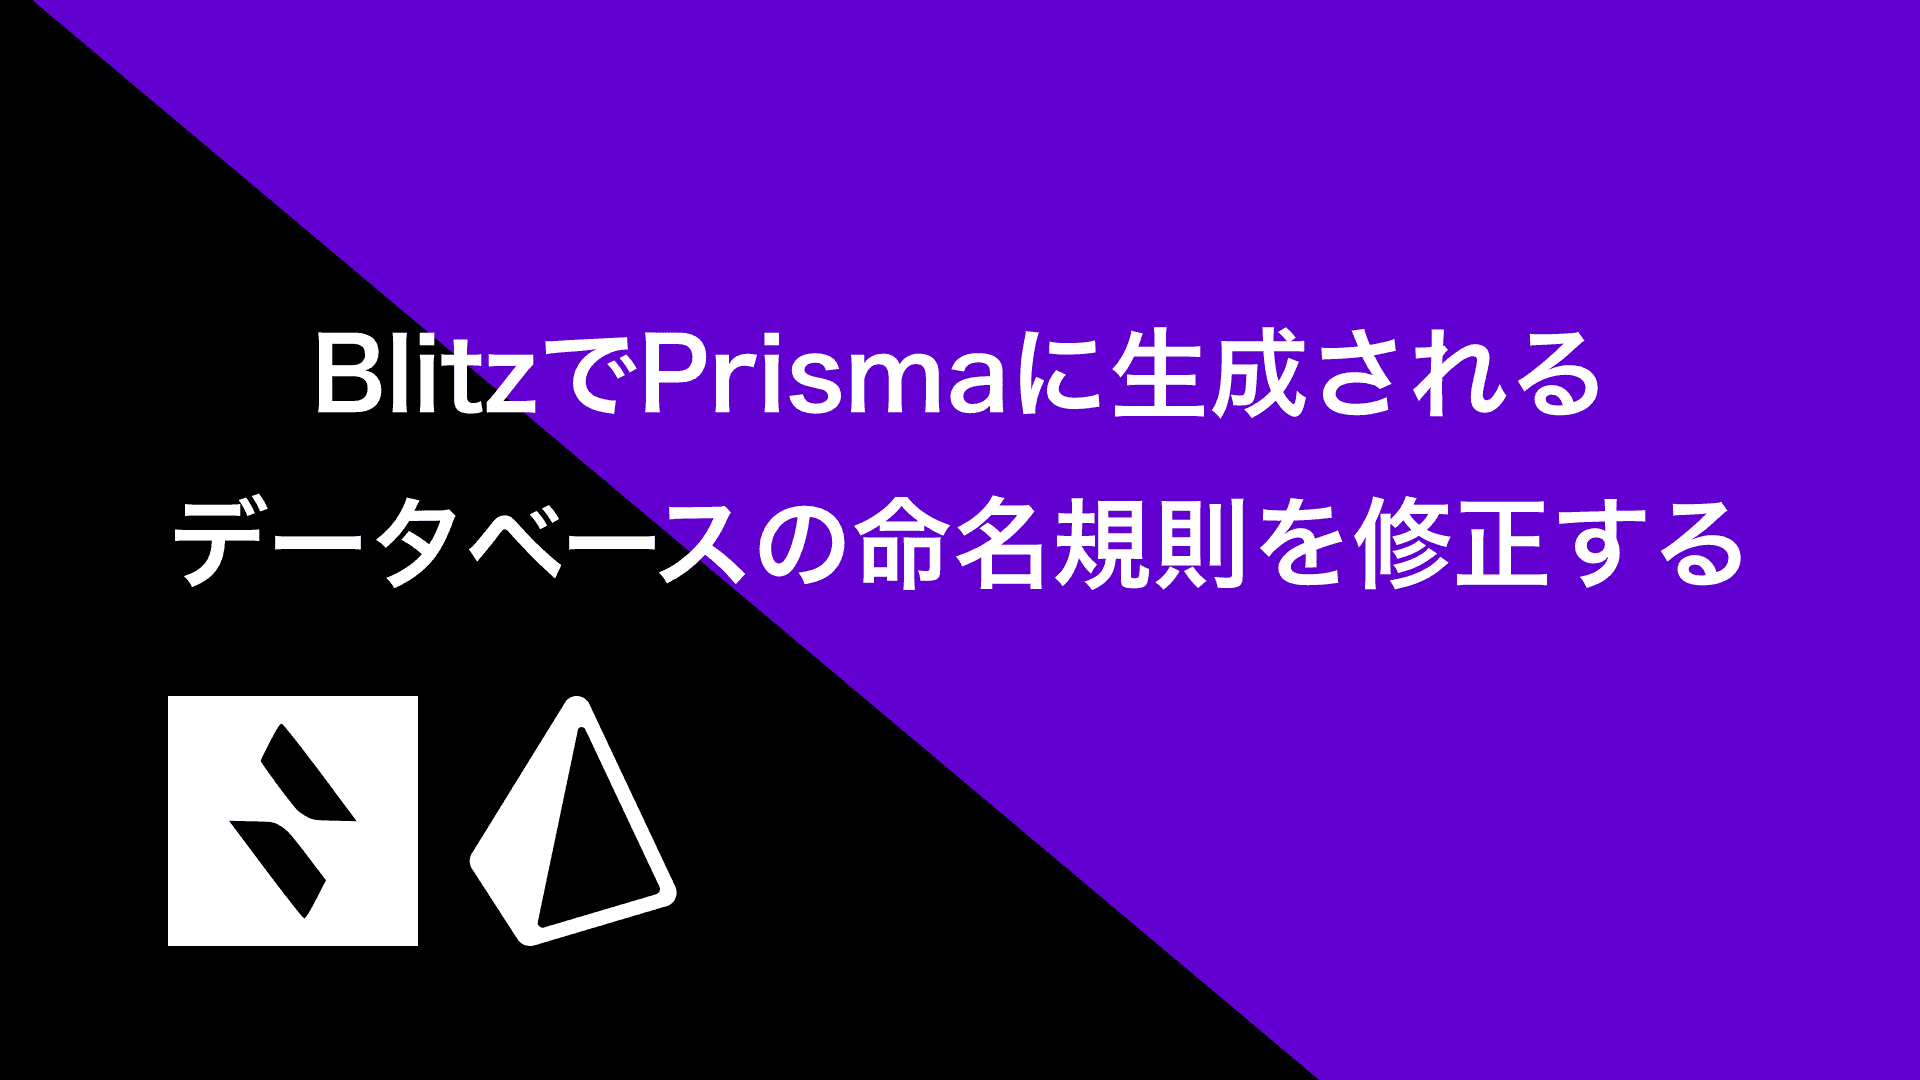 Blitz+Prisma+Database